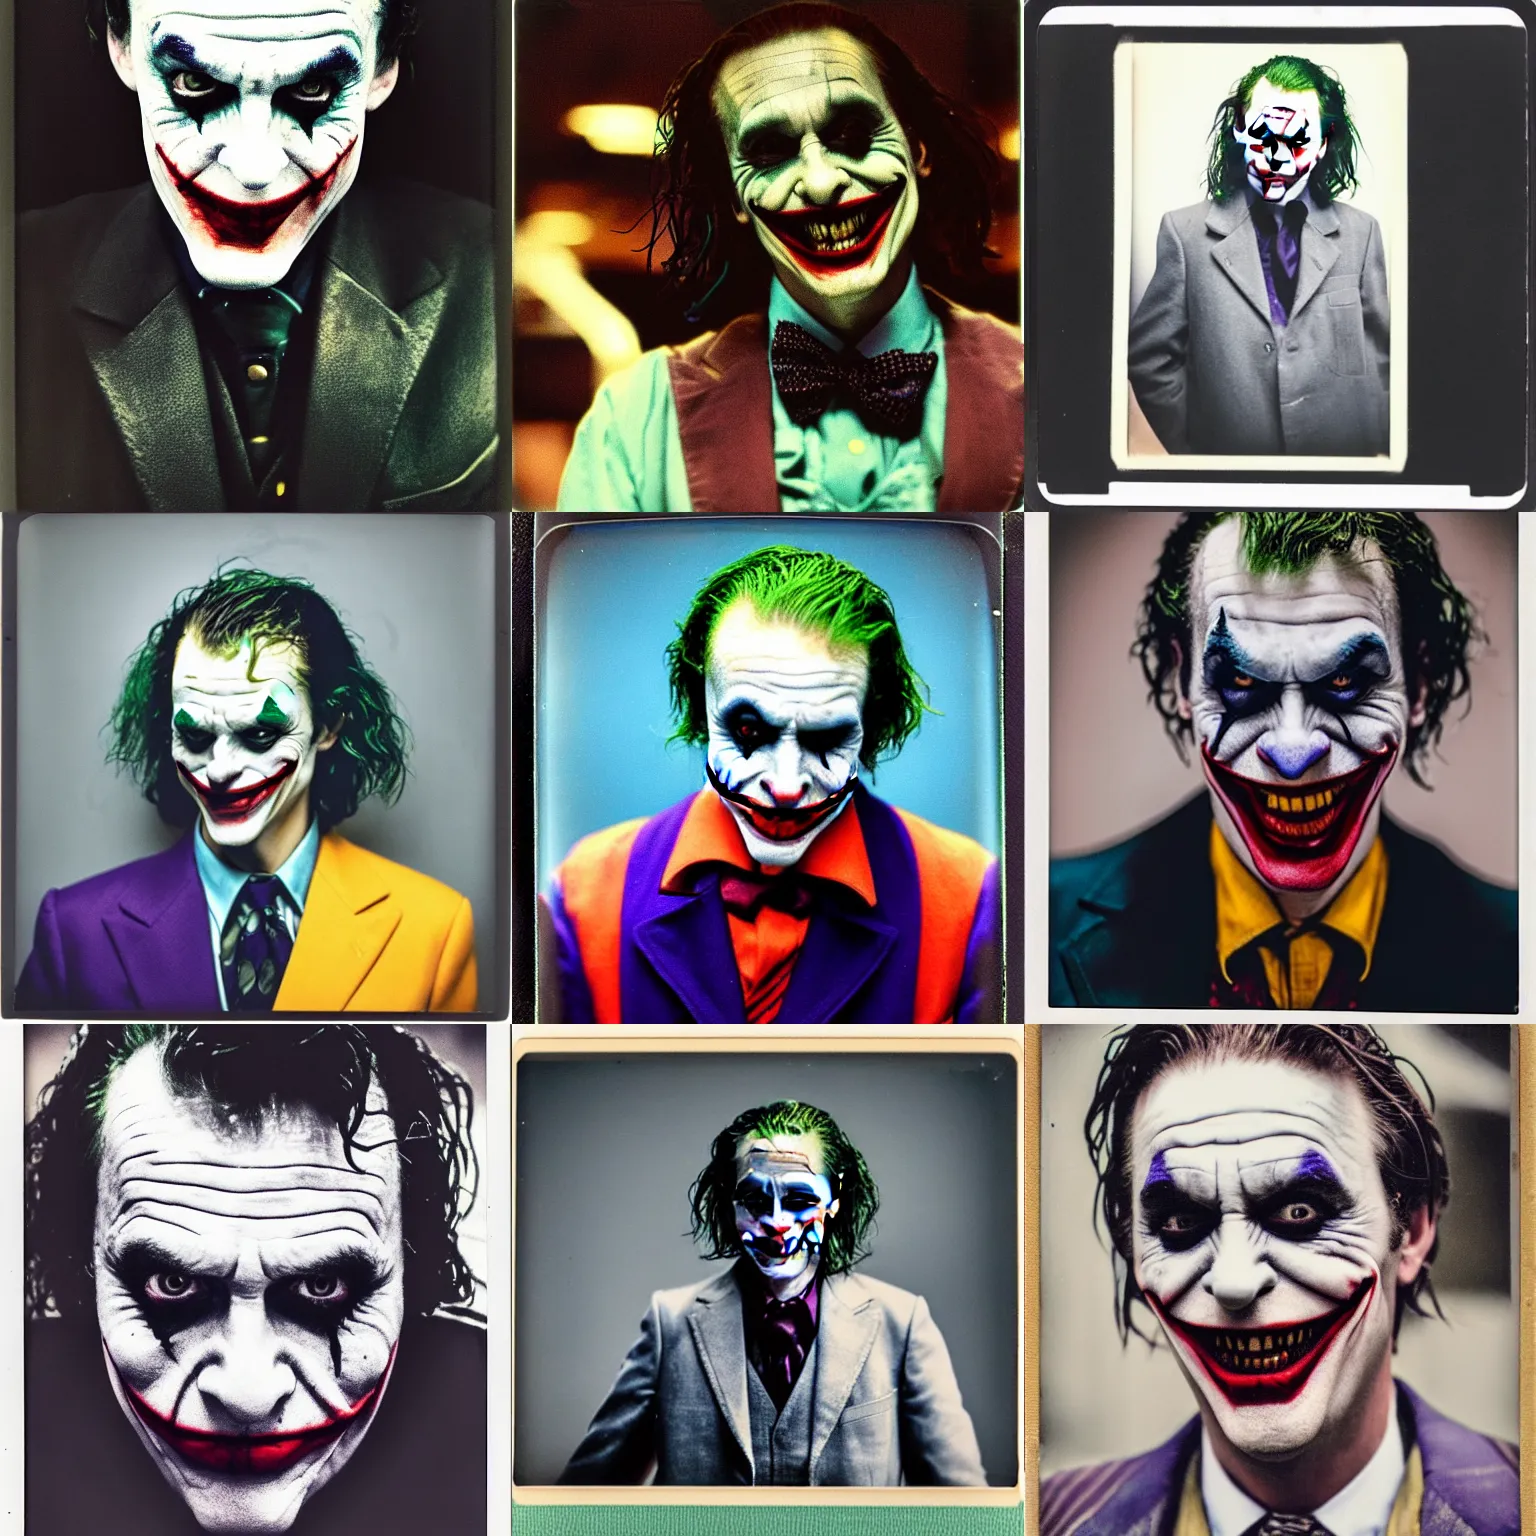 Prompt: David Mitchell as the Joker, polaroid photograph, 4k